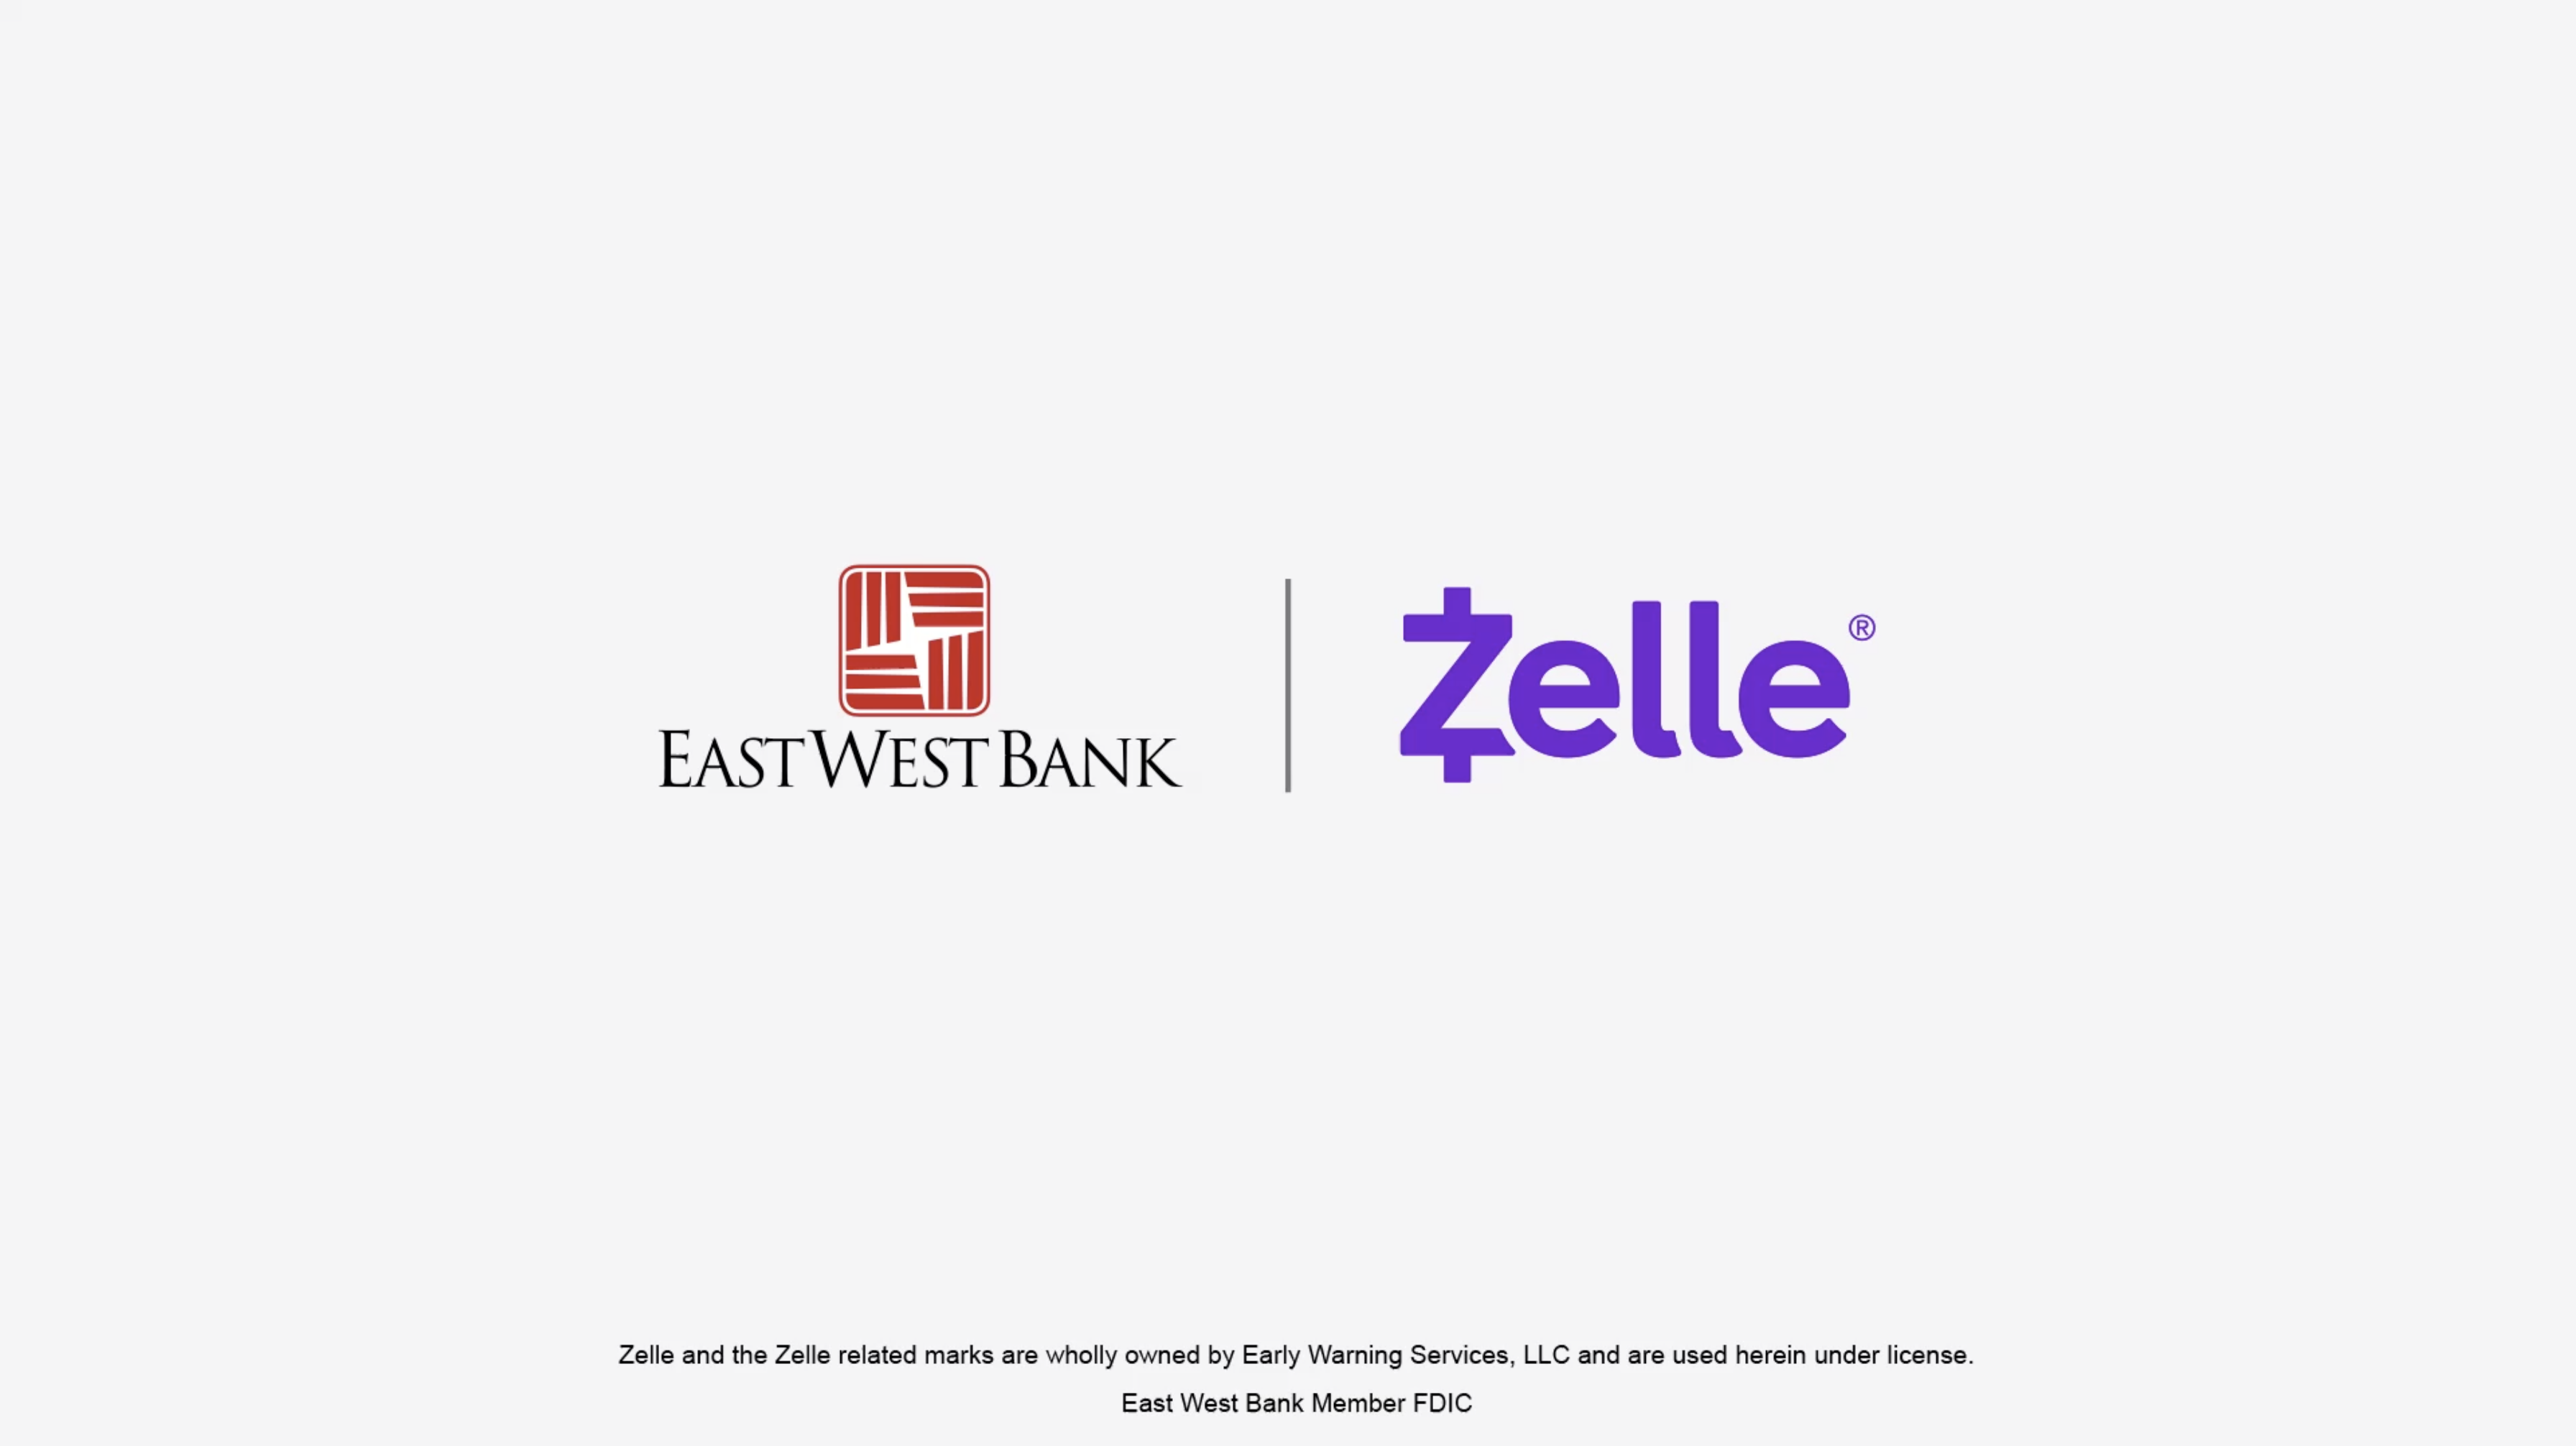 east west bank logo